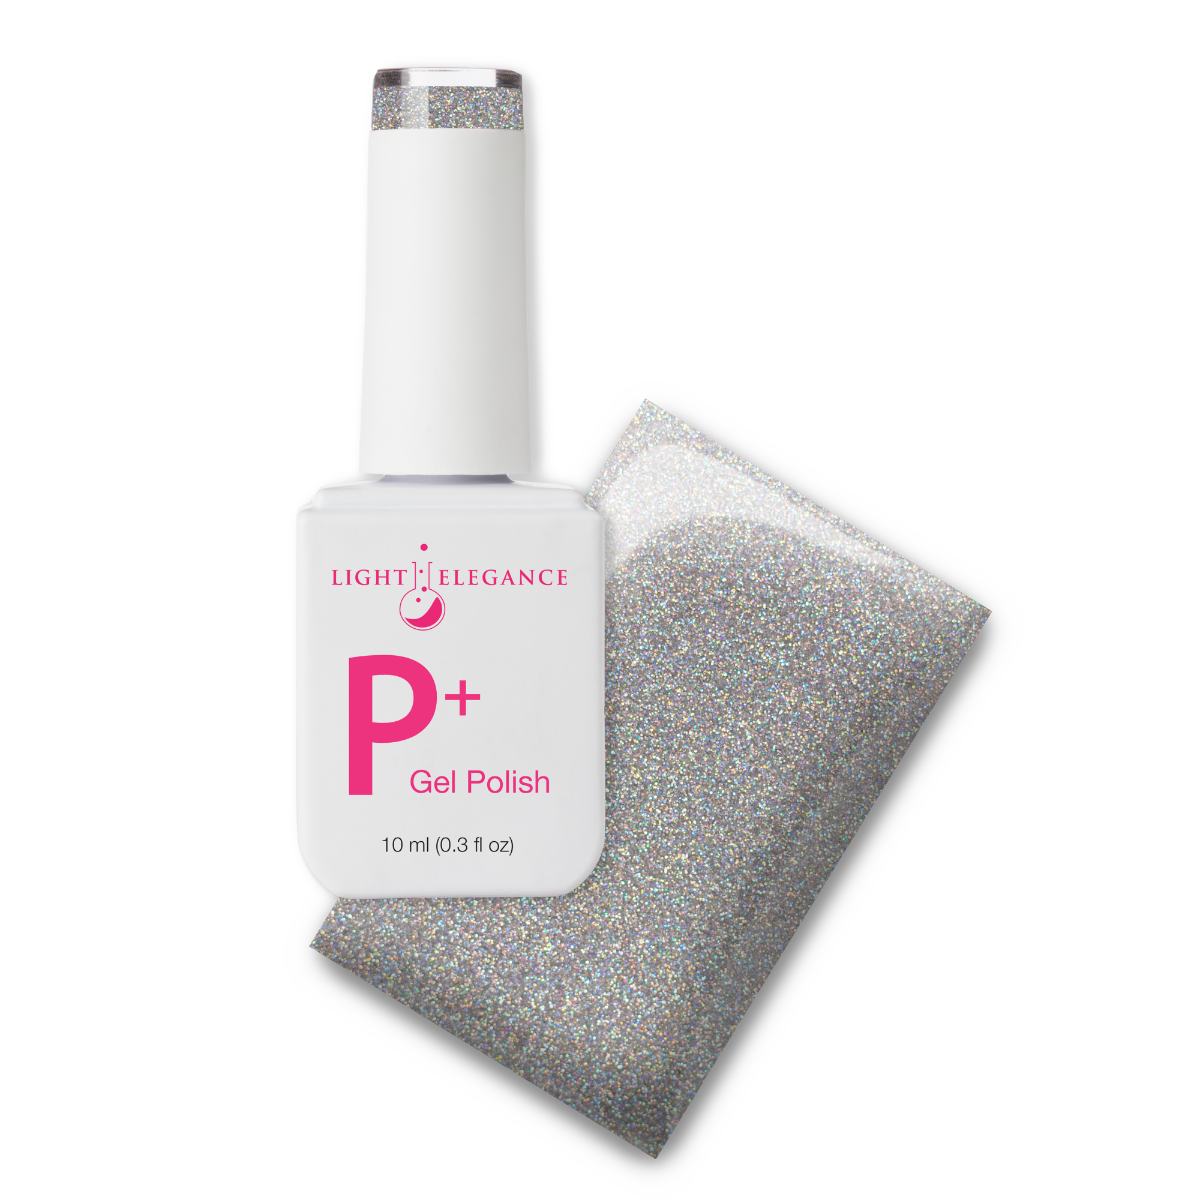 Light Elegance P+ Soak Off Glitter Gel - Disco :: New Packaging - Creata Beauty - Professional Beauty Products